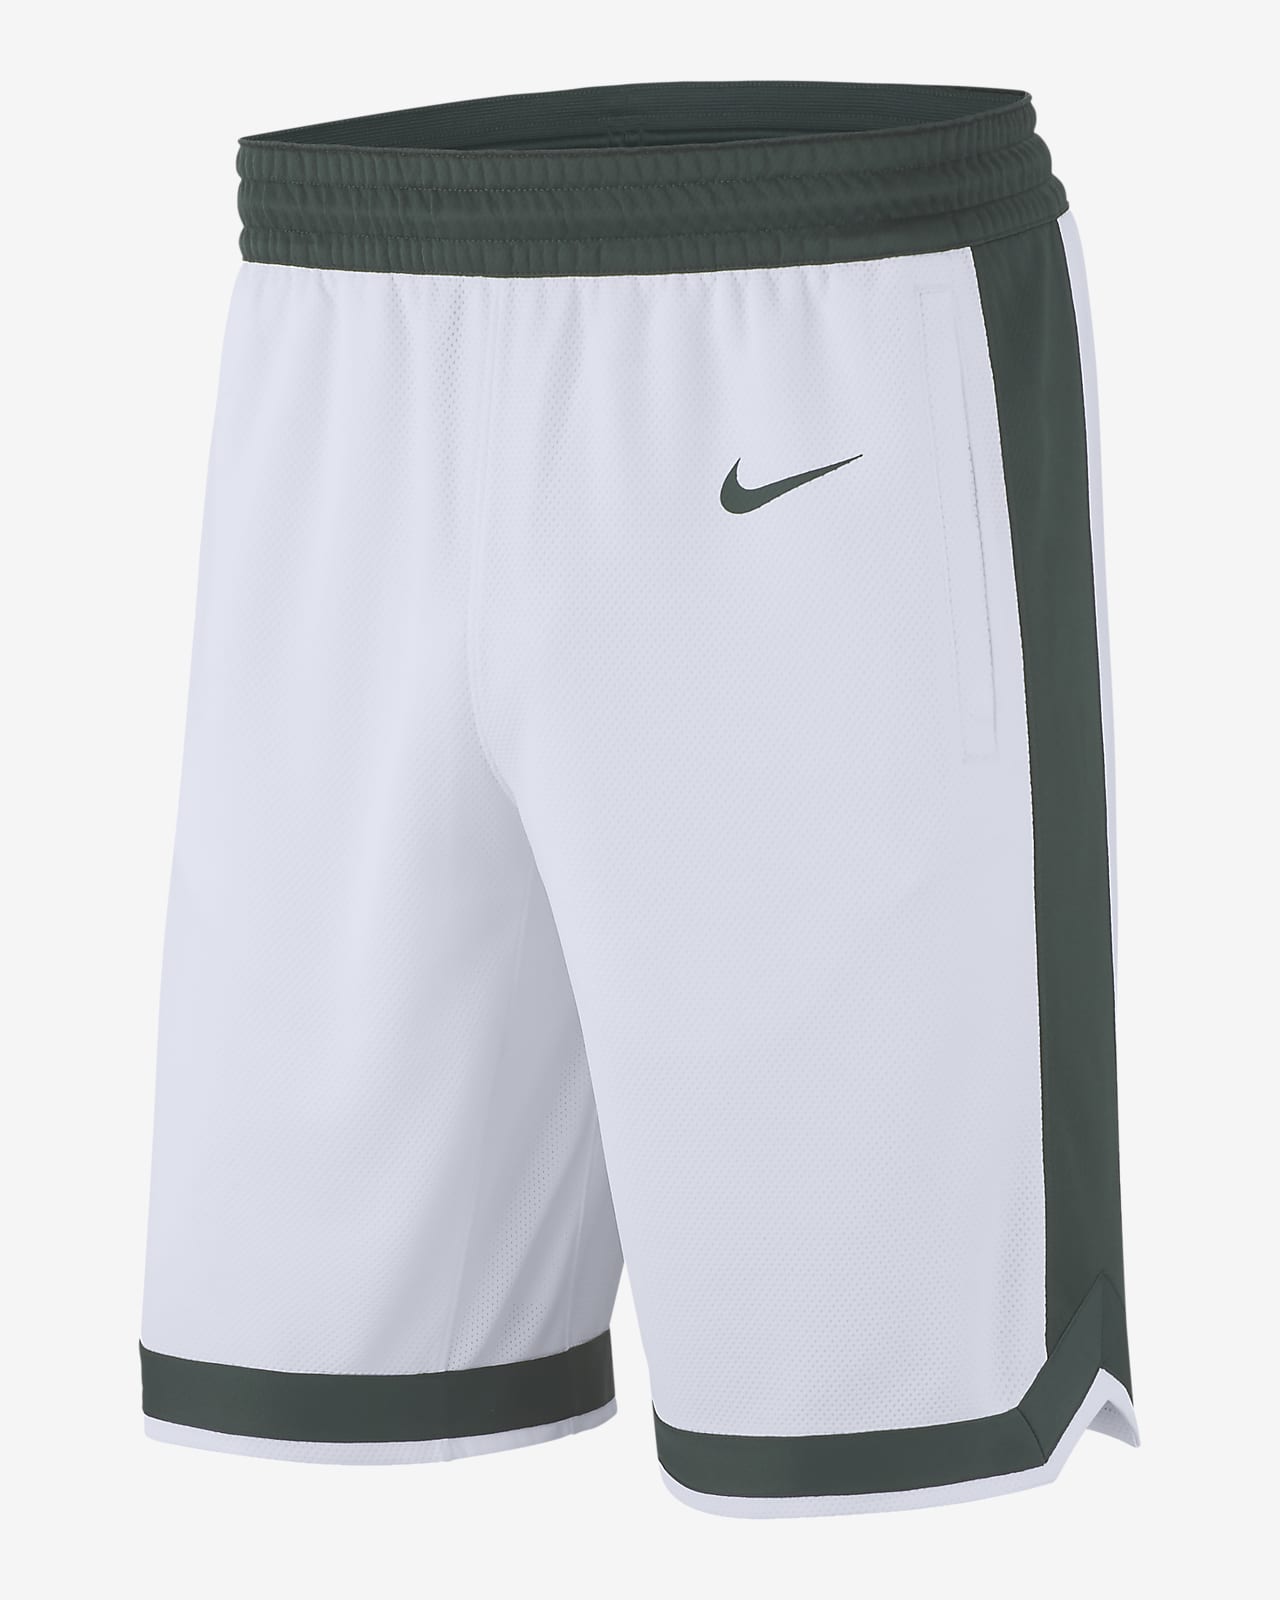 21 Michigan State Spartans Nike Replica Basketball Jersey - White/Green